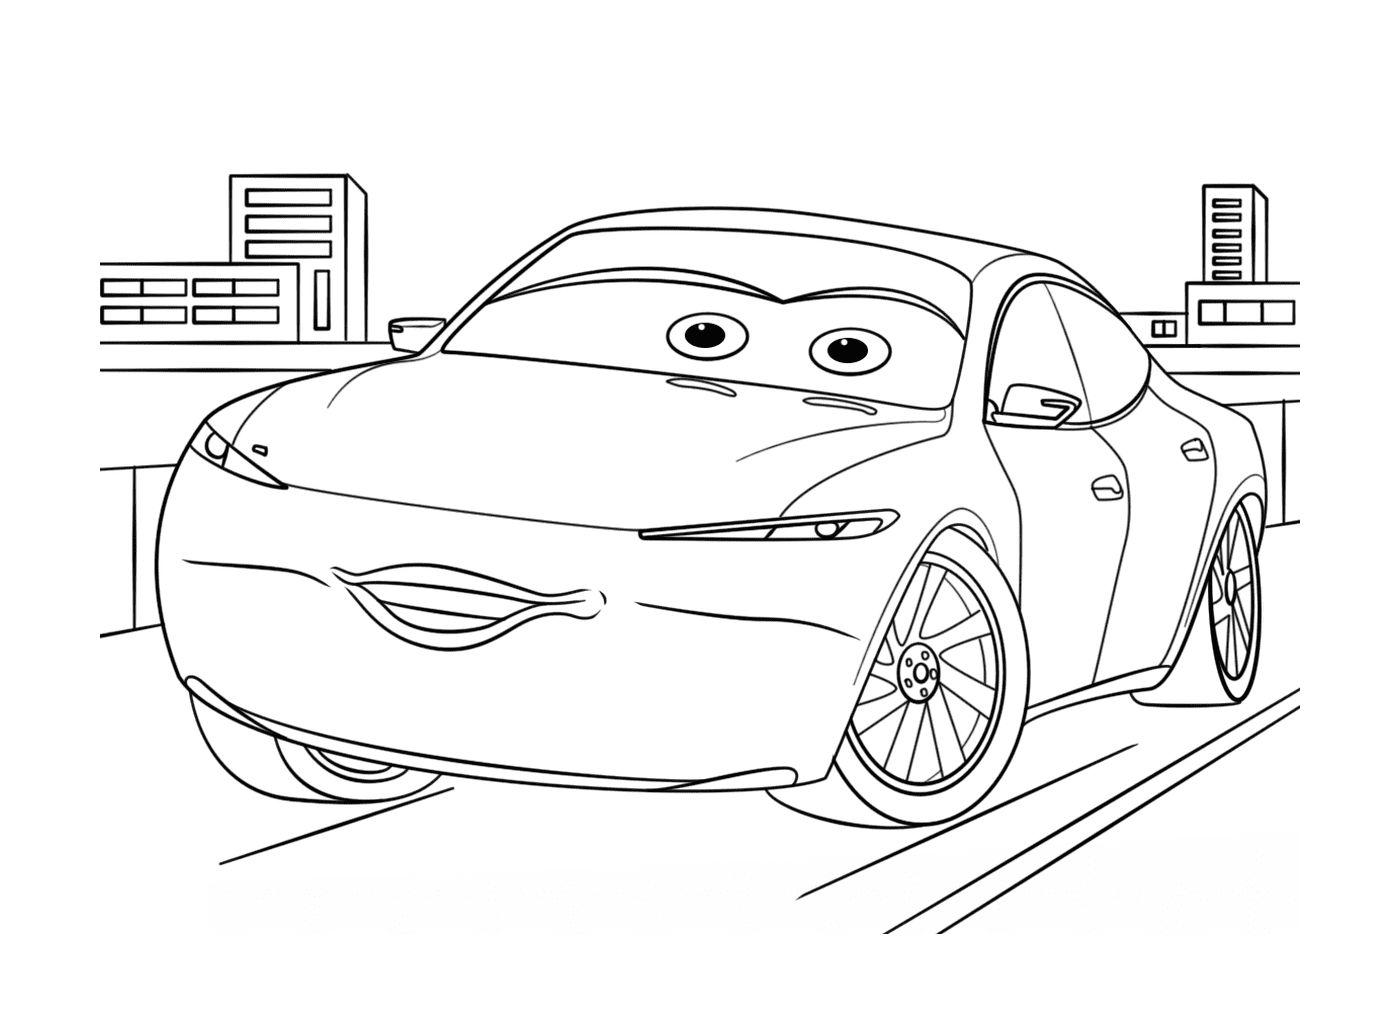  A car with eyes drawn on it 